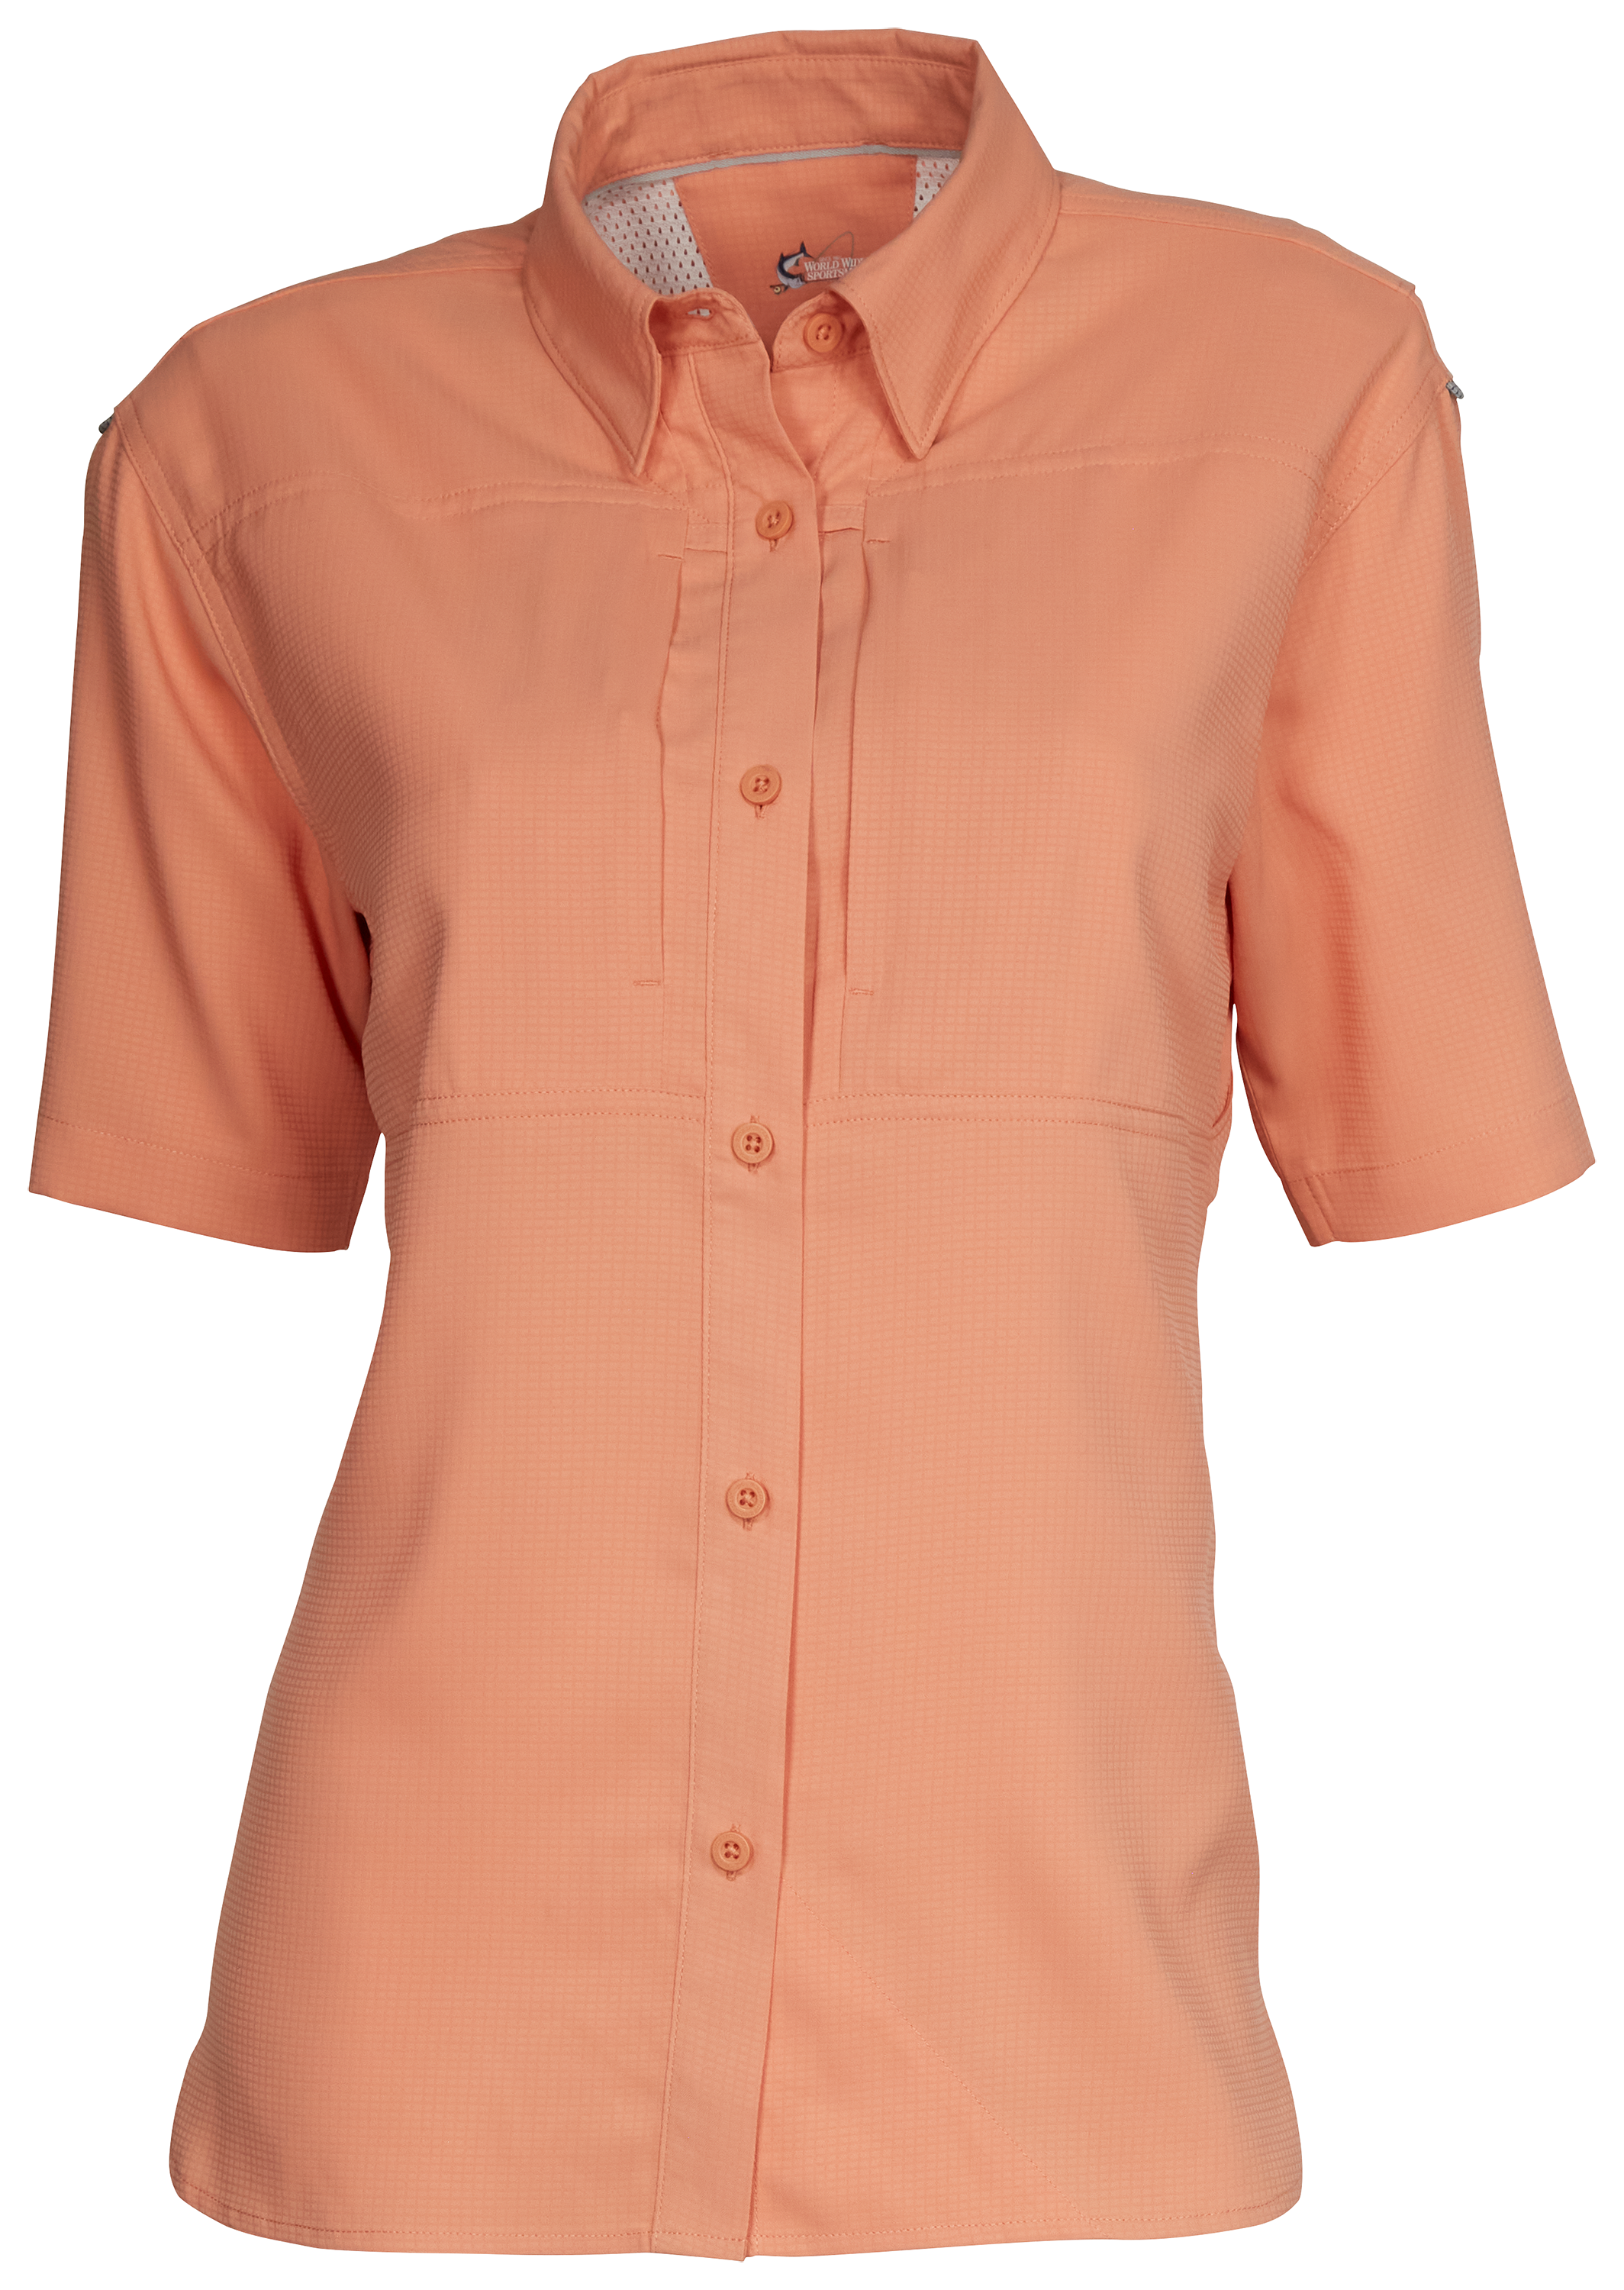 World Wide Sportsman Marina Short-Sleeve Shirt for Ladies - Canyon Sunset - M